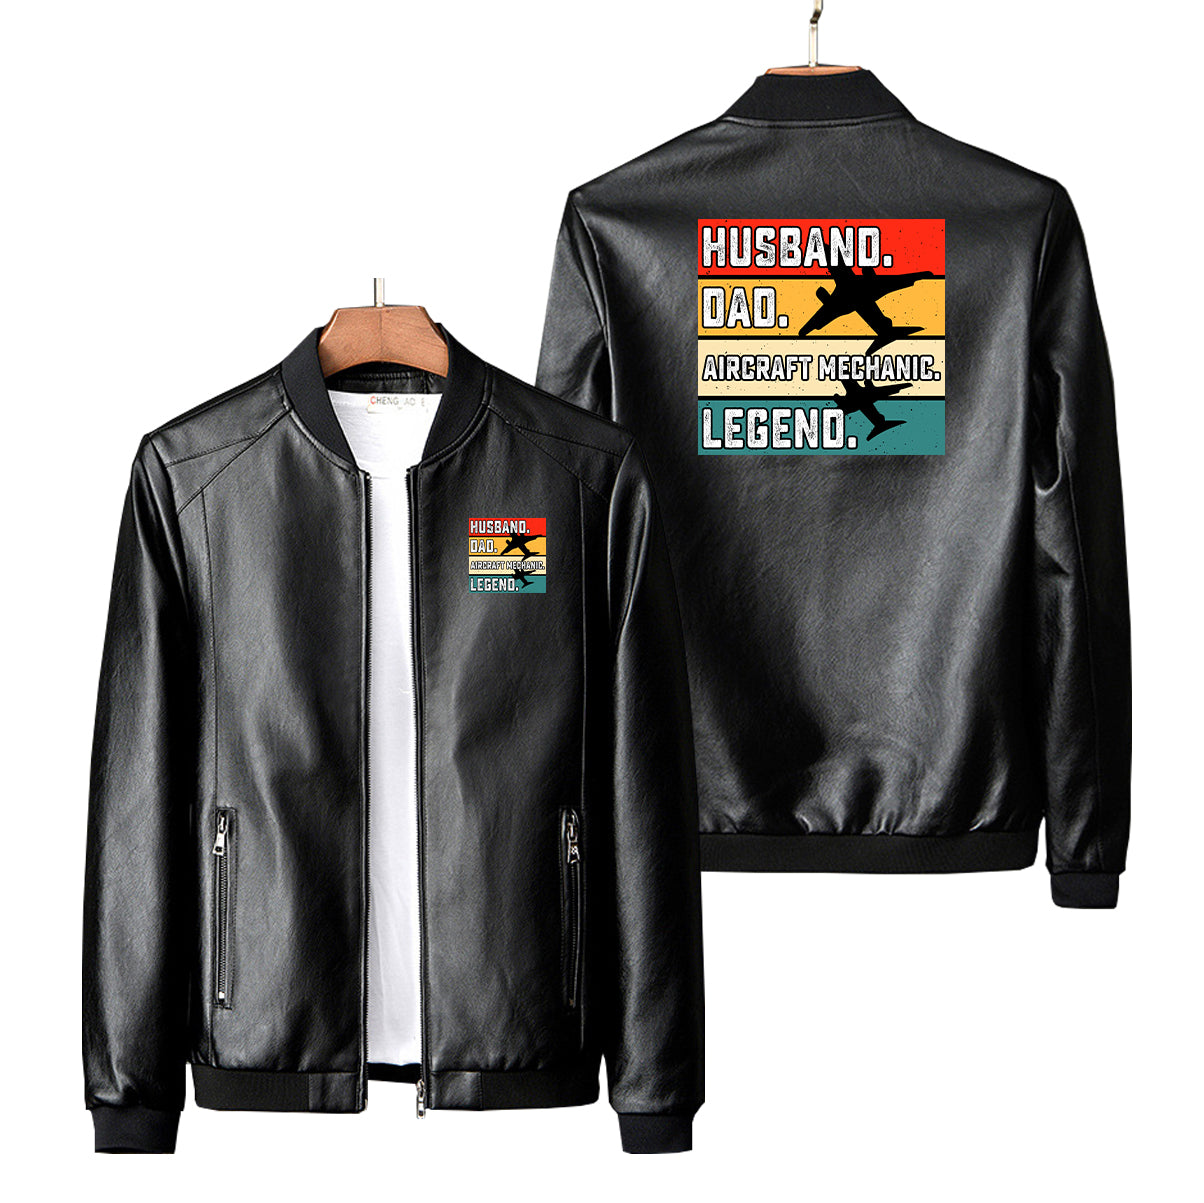 Husband & Dad & Aircraft Mechanic & Legend Designed PU Leather Jackets